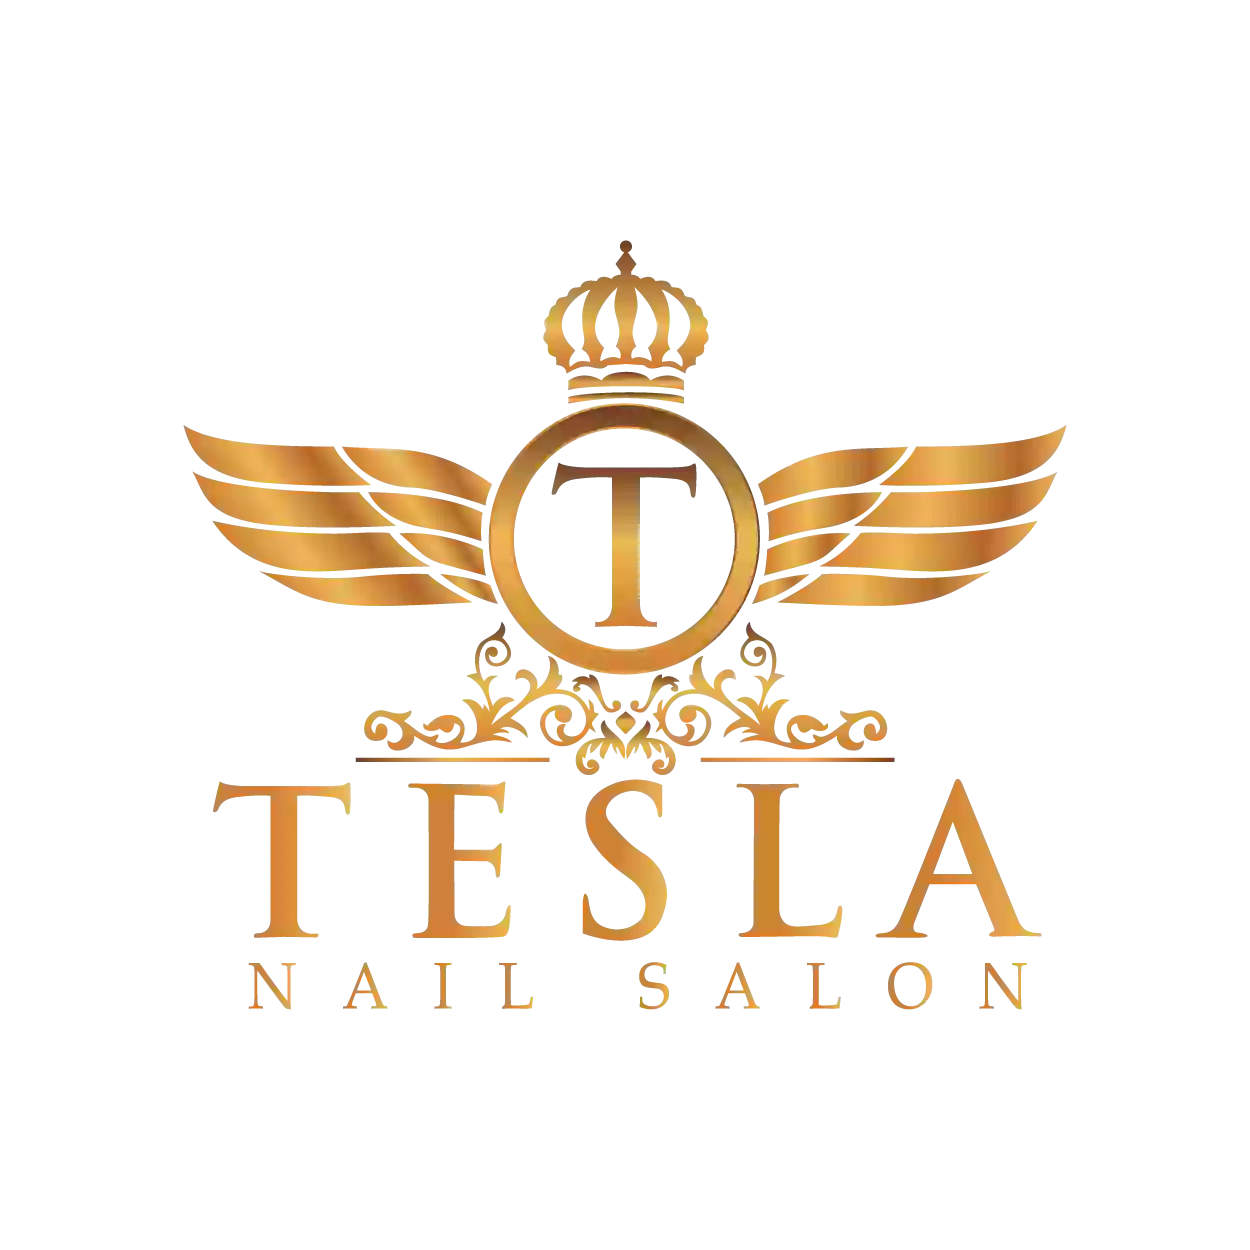 Tesla Nail Salon Dania Beach